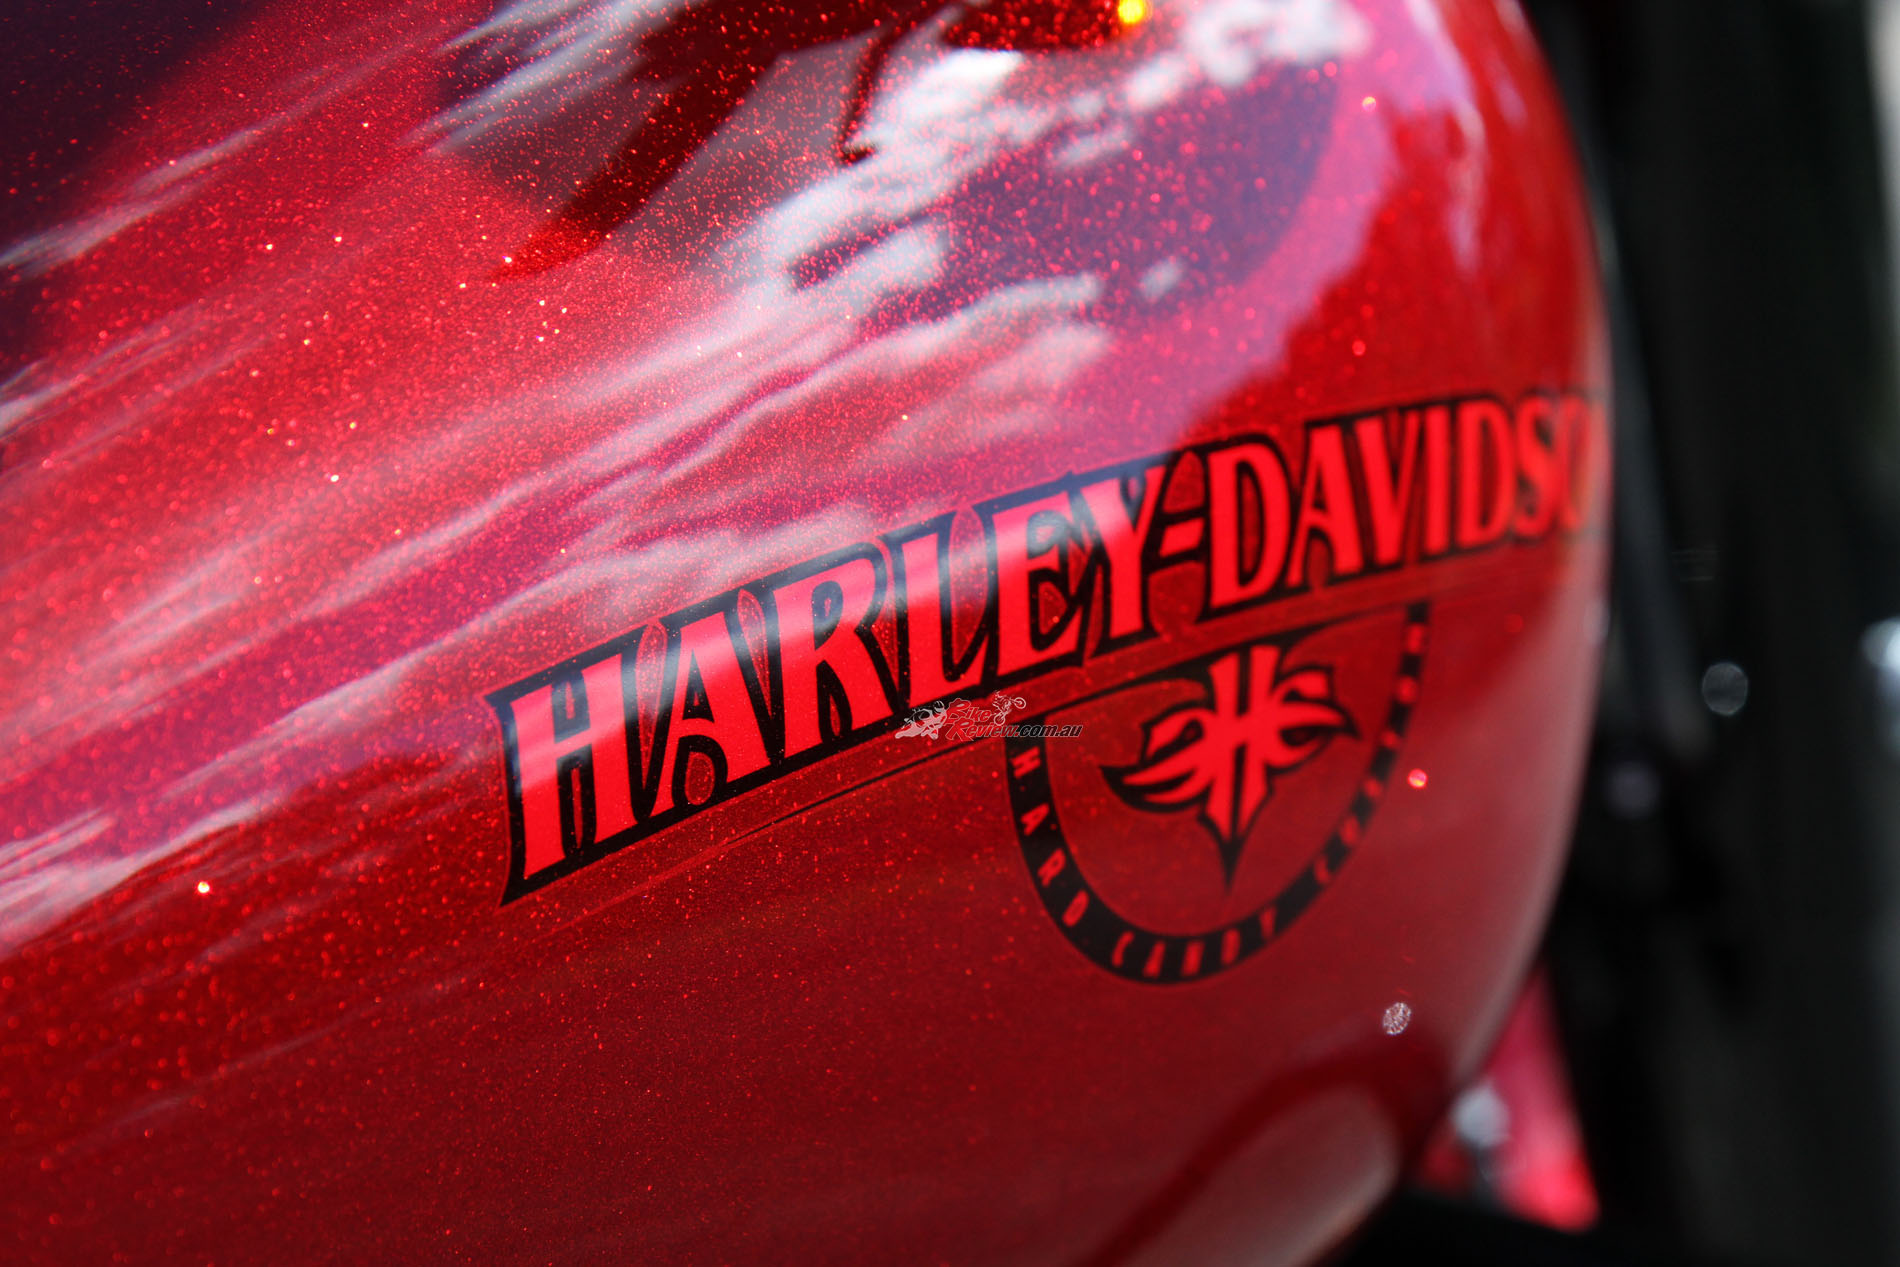 Harley-Davidson's Road King